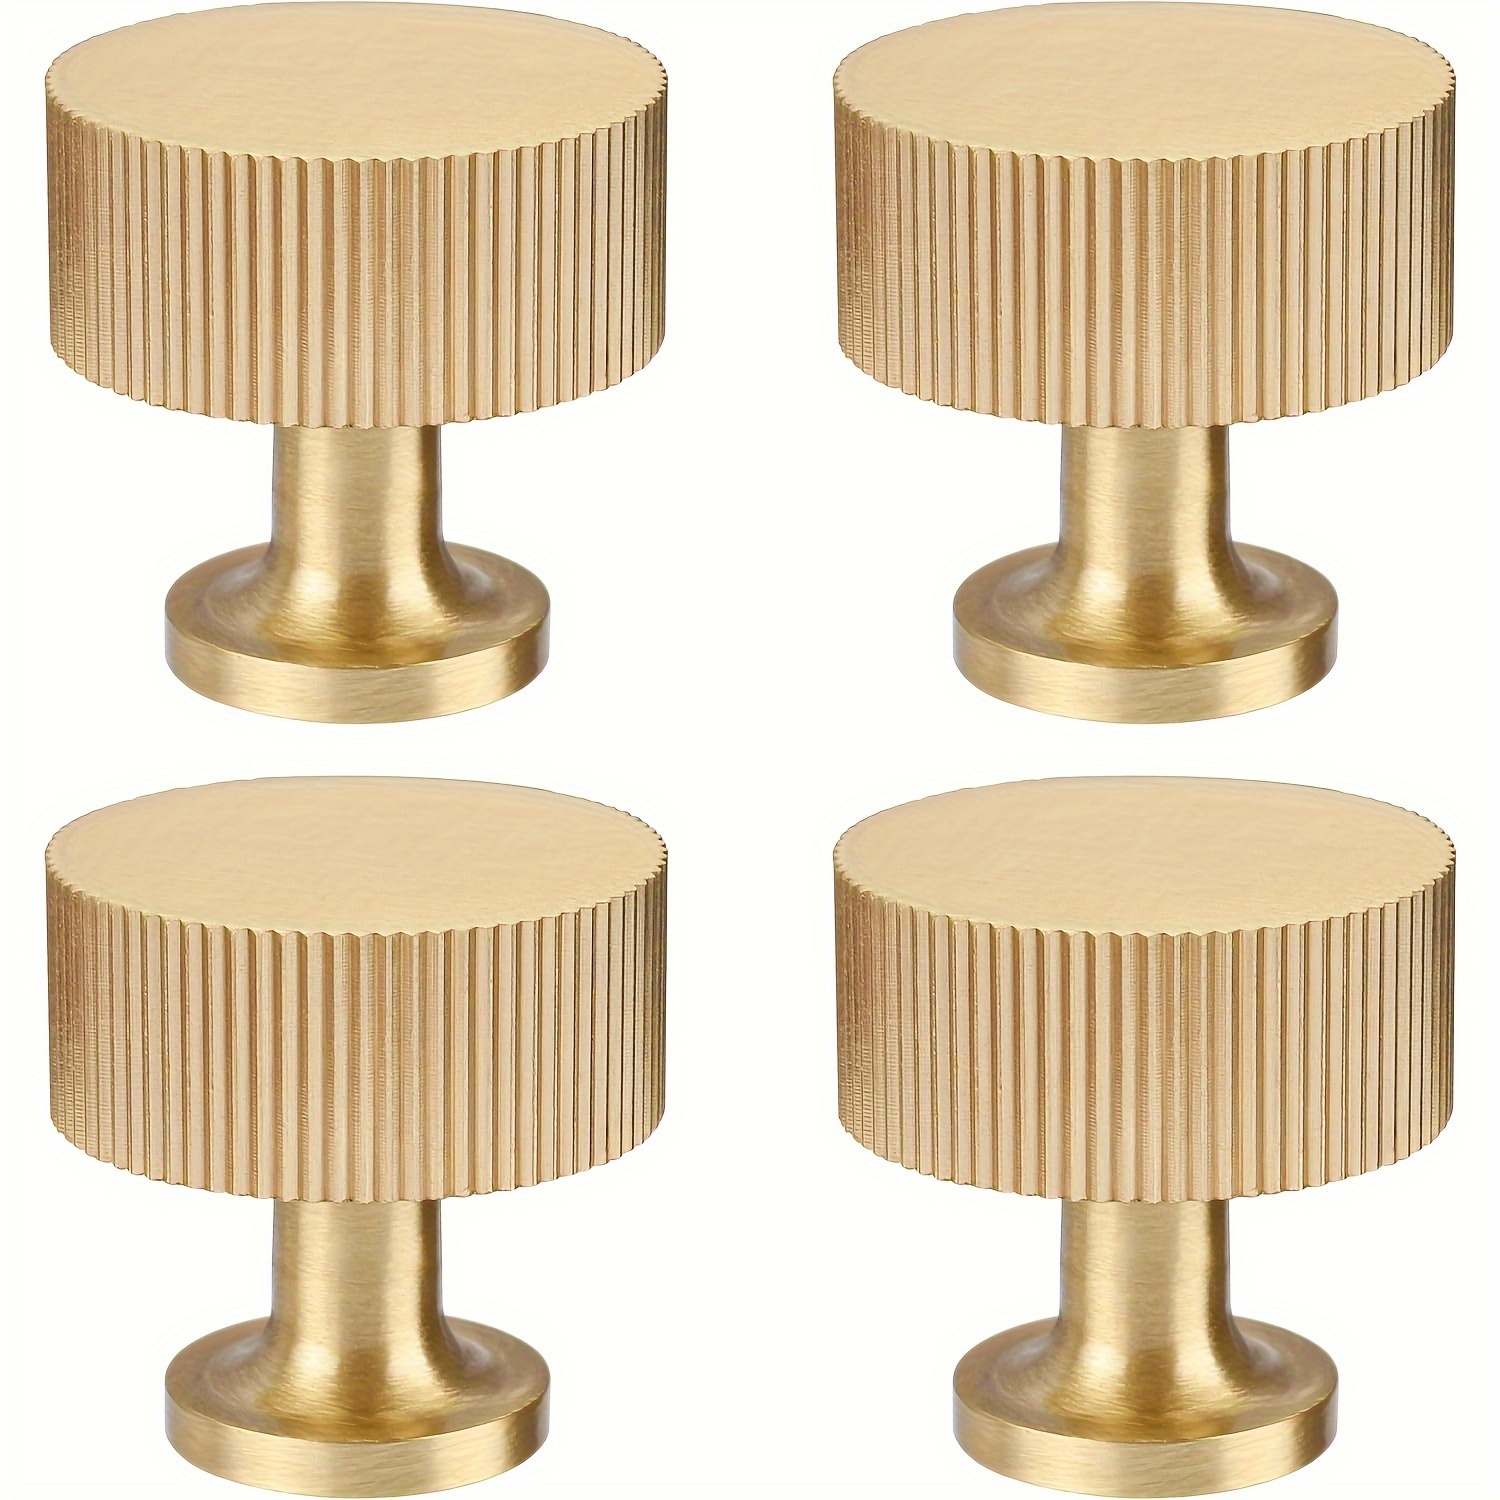 

4pcs Set Vintage European Brass Cabinet Knobs - Elegant Pulls For Kitchen Drawers & Dressers, Modern Golden Finish Handles (1.1"x1.1") Knobs For Cabinets And Drawers Handles For Cabinets And Drawers